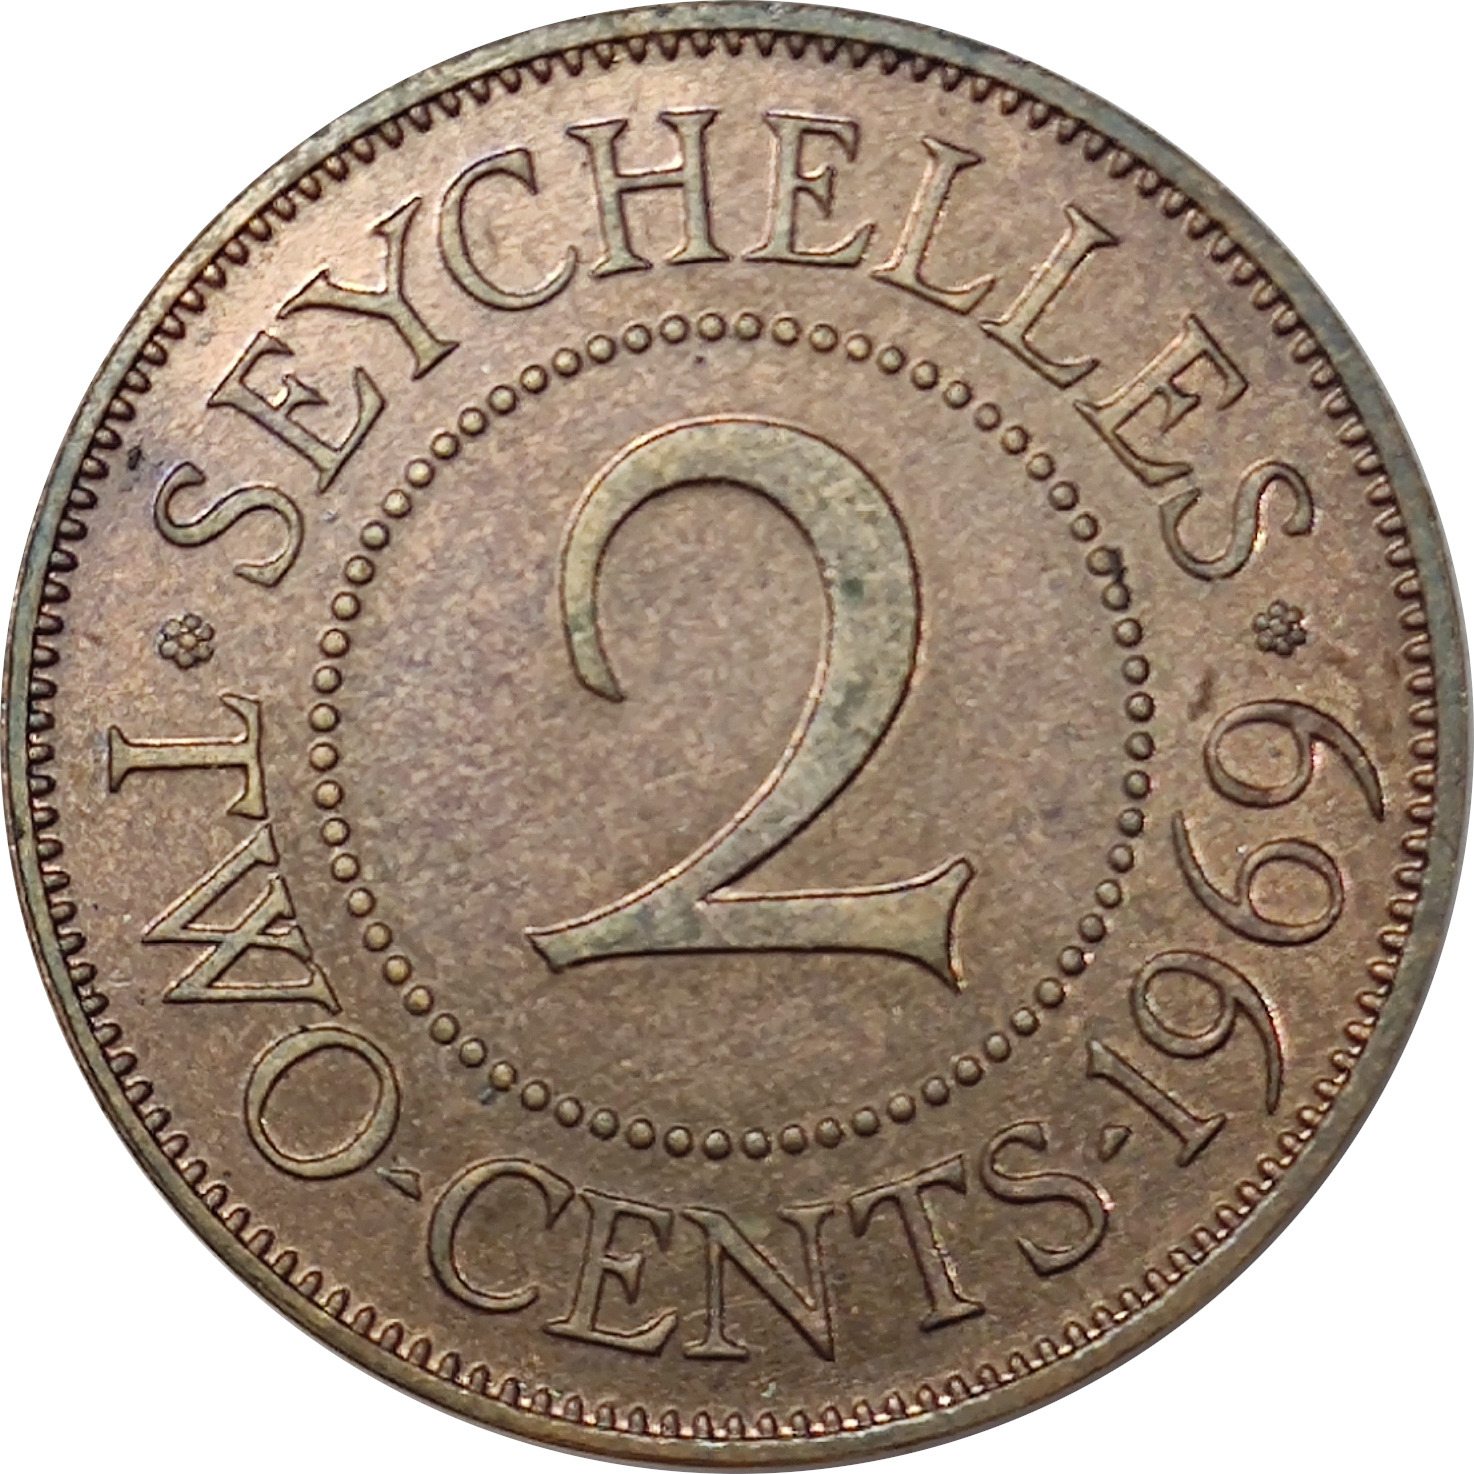 2 cents - Elizabeth II